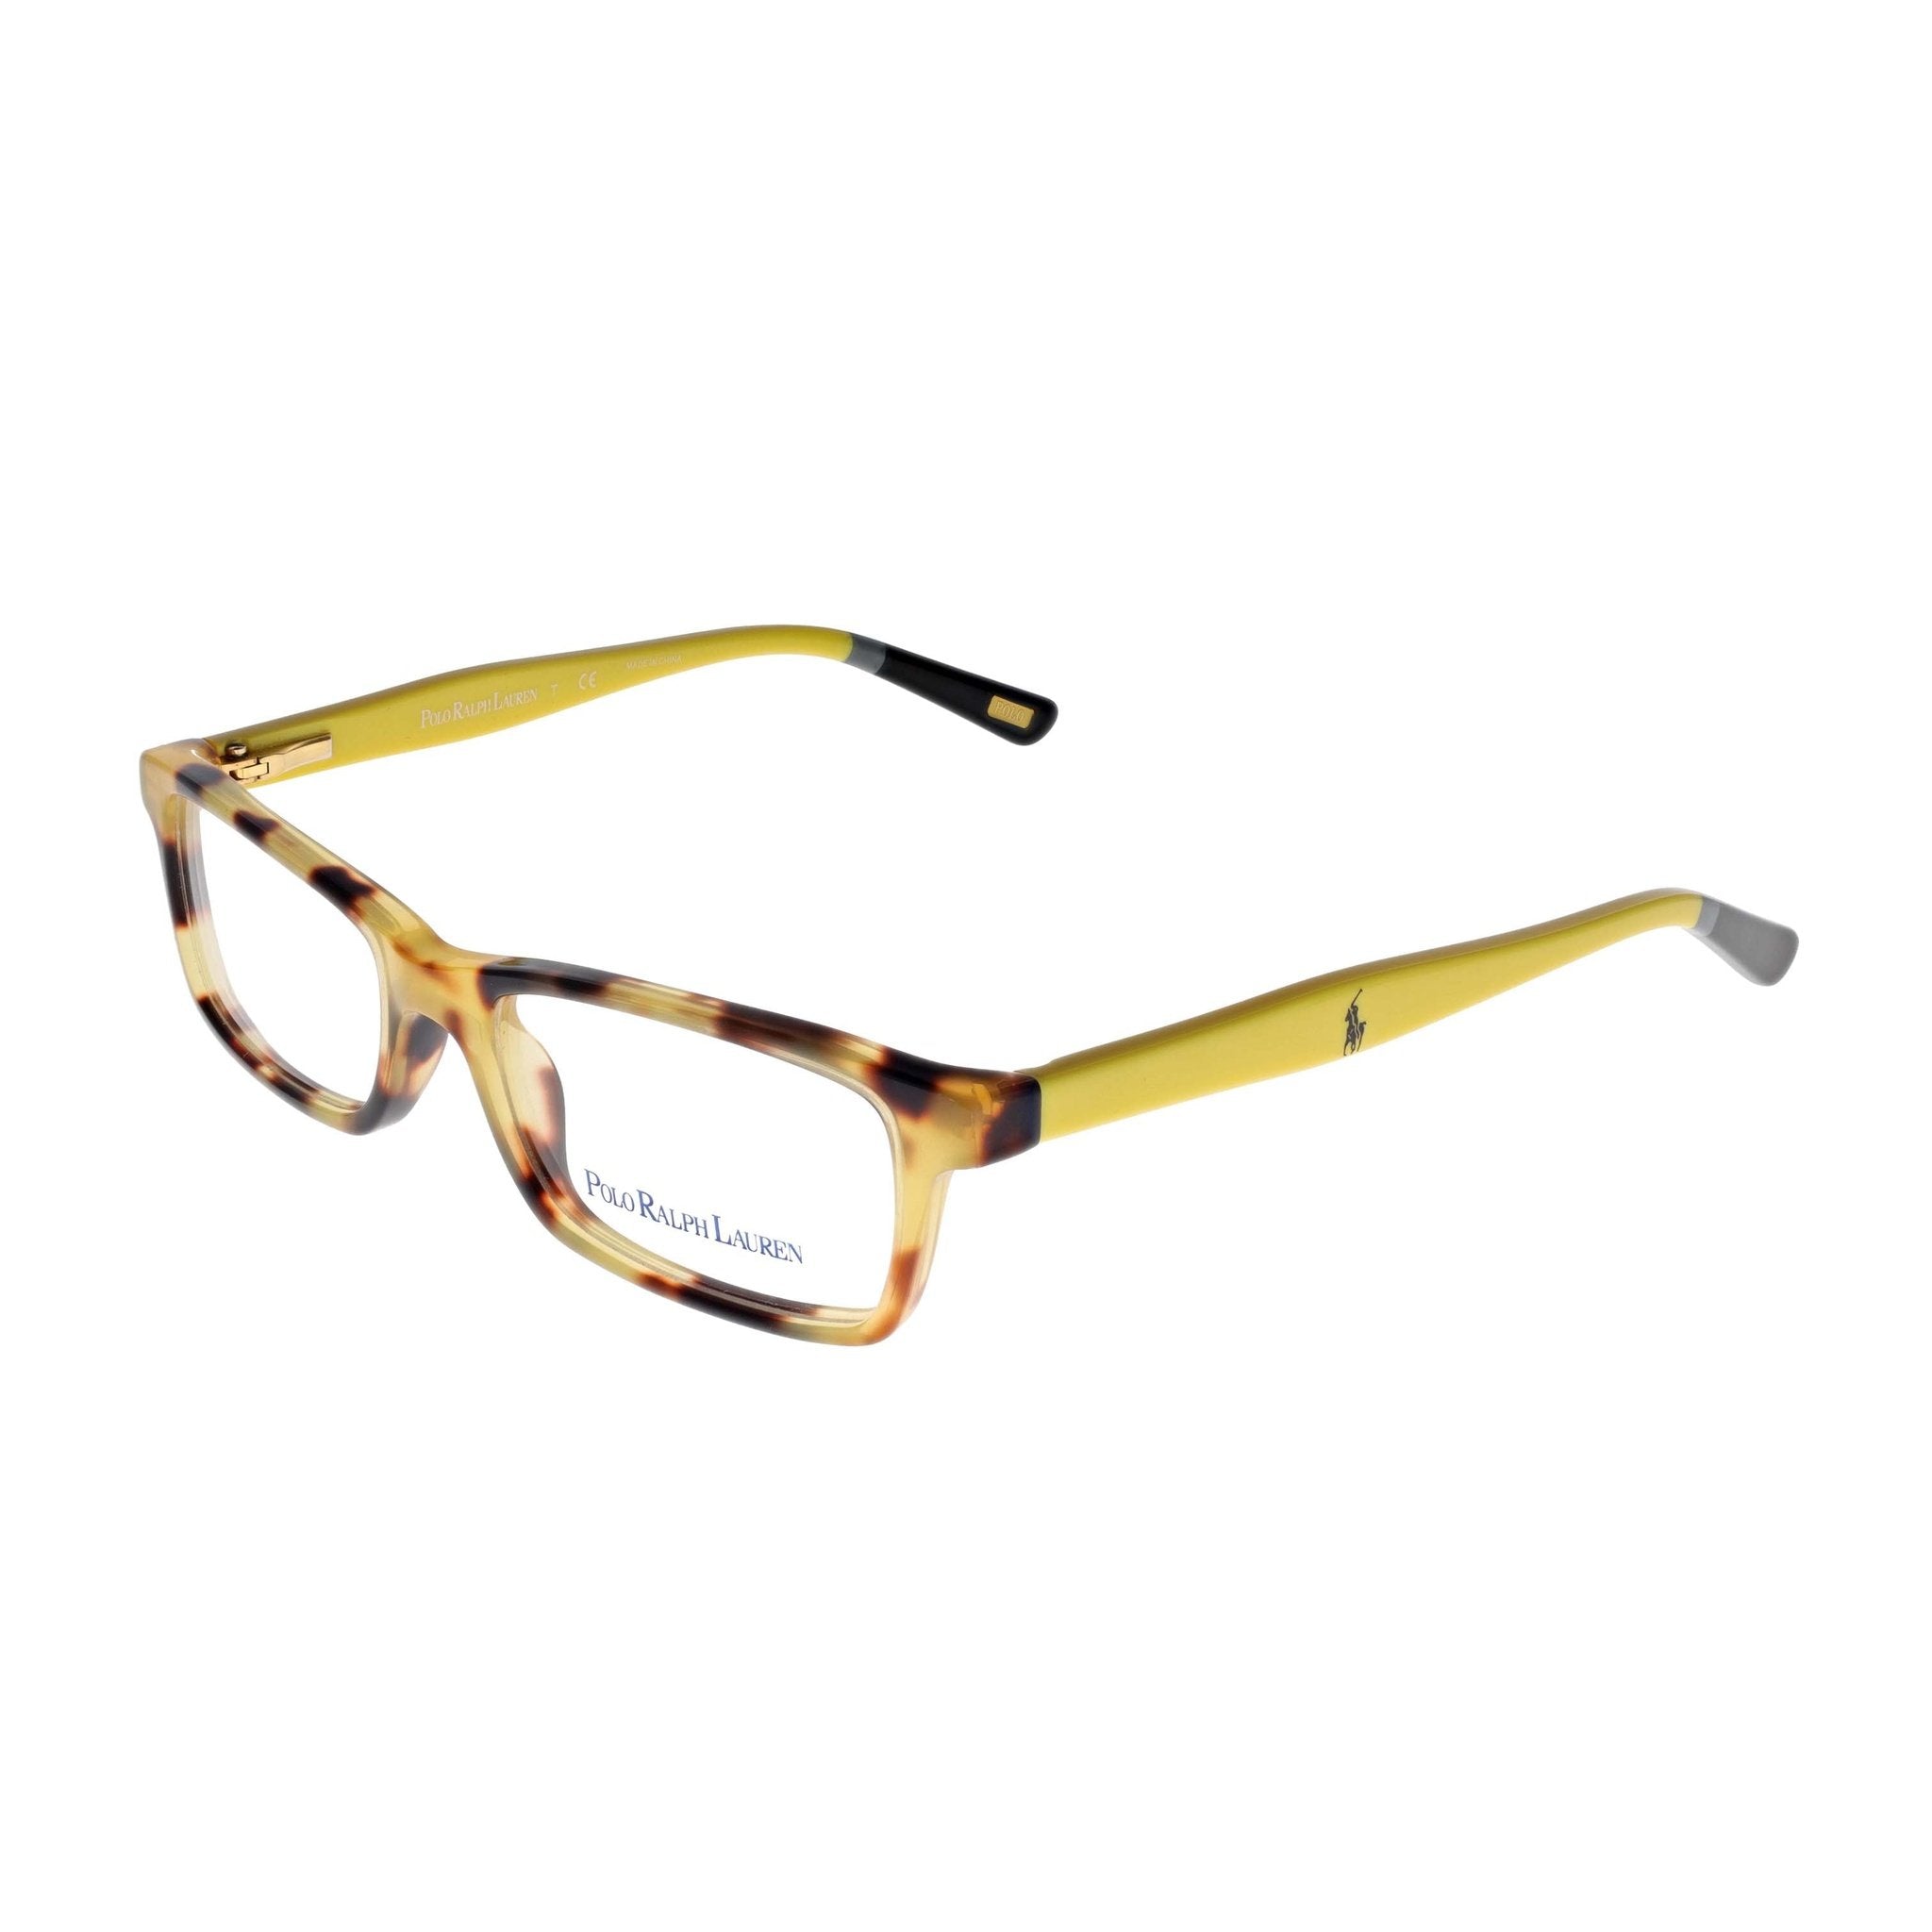 Polo Ralph Lauren Ph 3128 men Sunglasses online sale